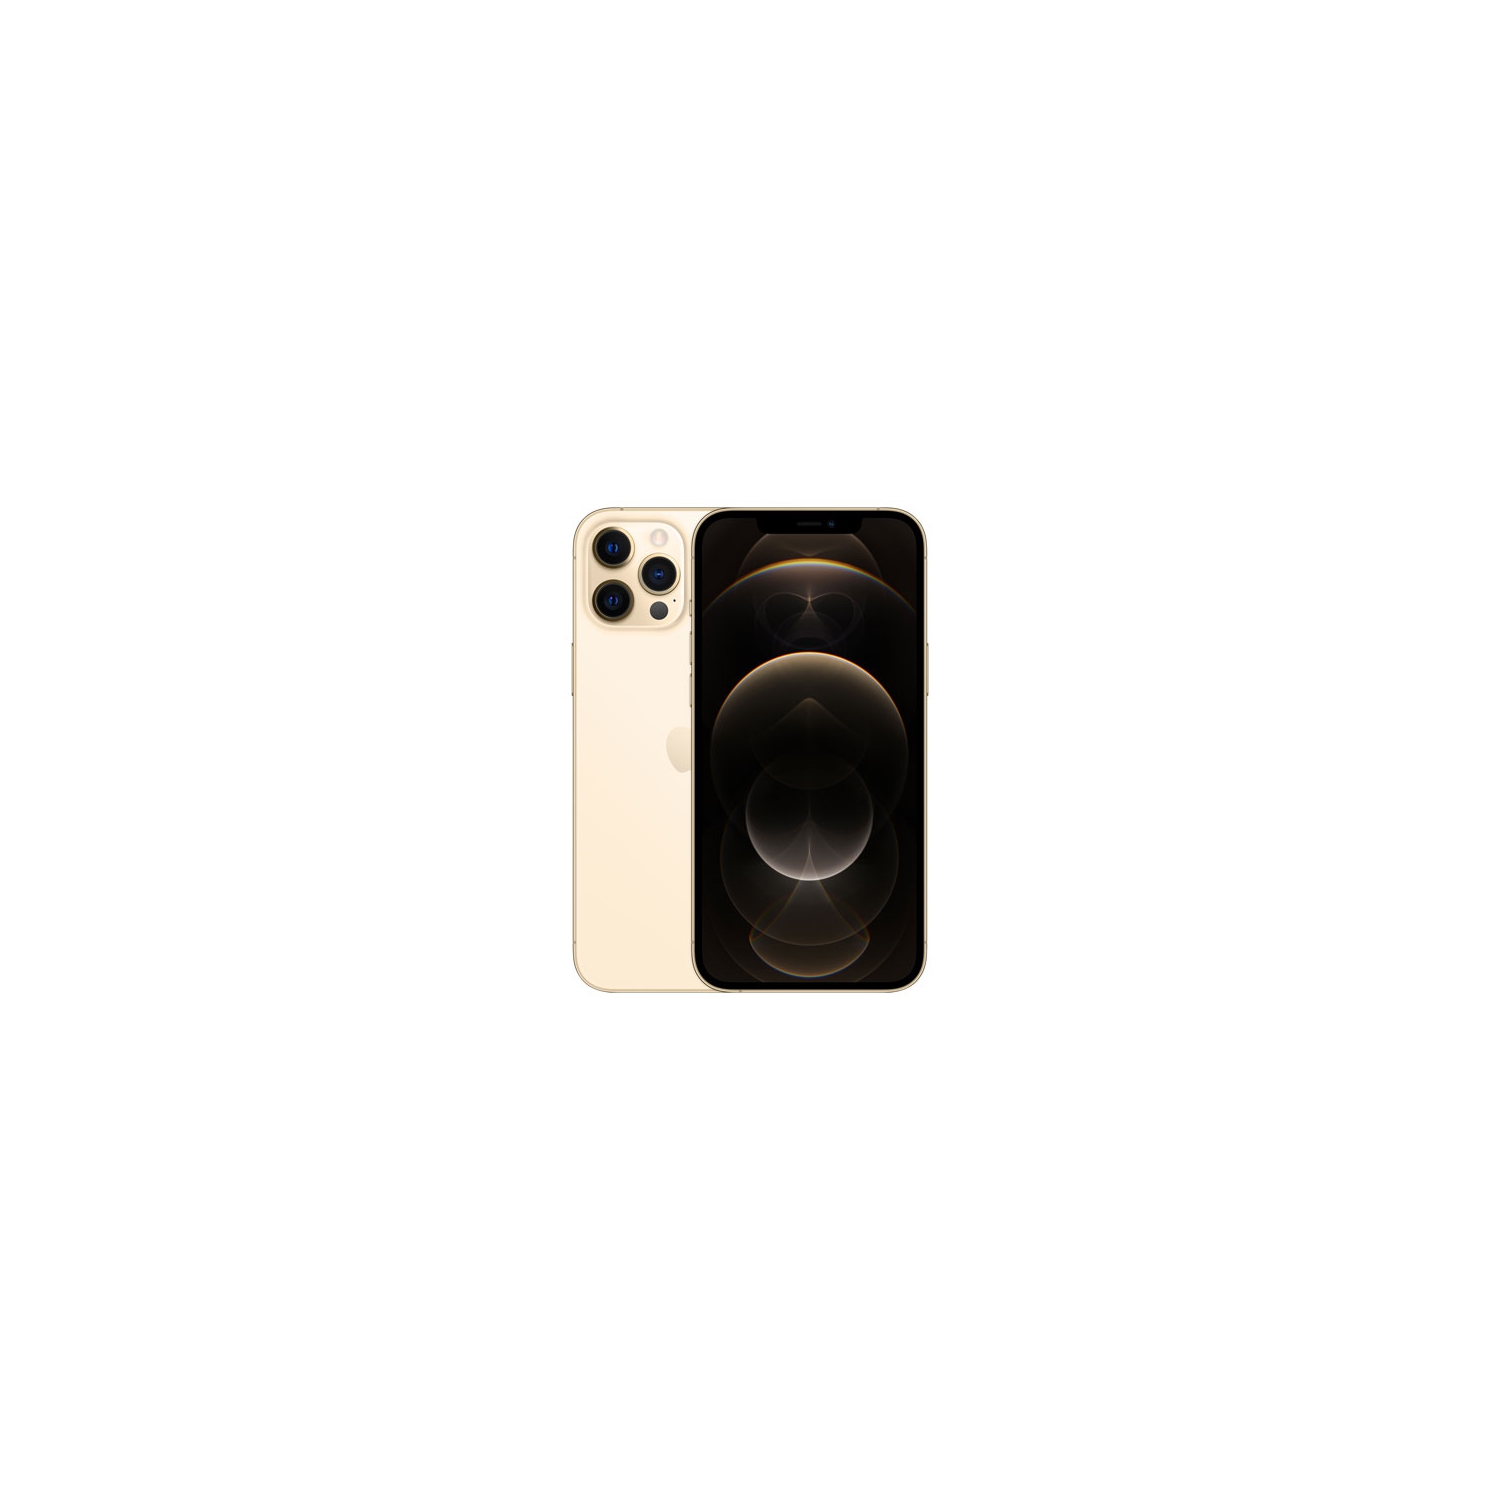 Refurbished (Good) - Apple iPhone 12 Pro Max 128GB Smartphone - Gold - Unlocked